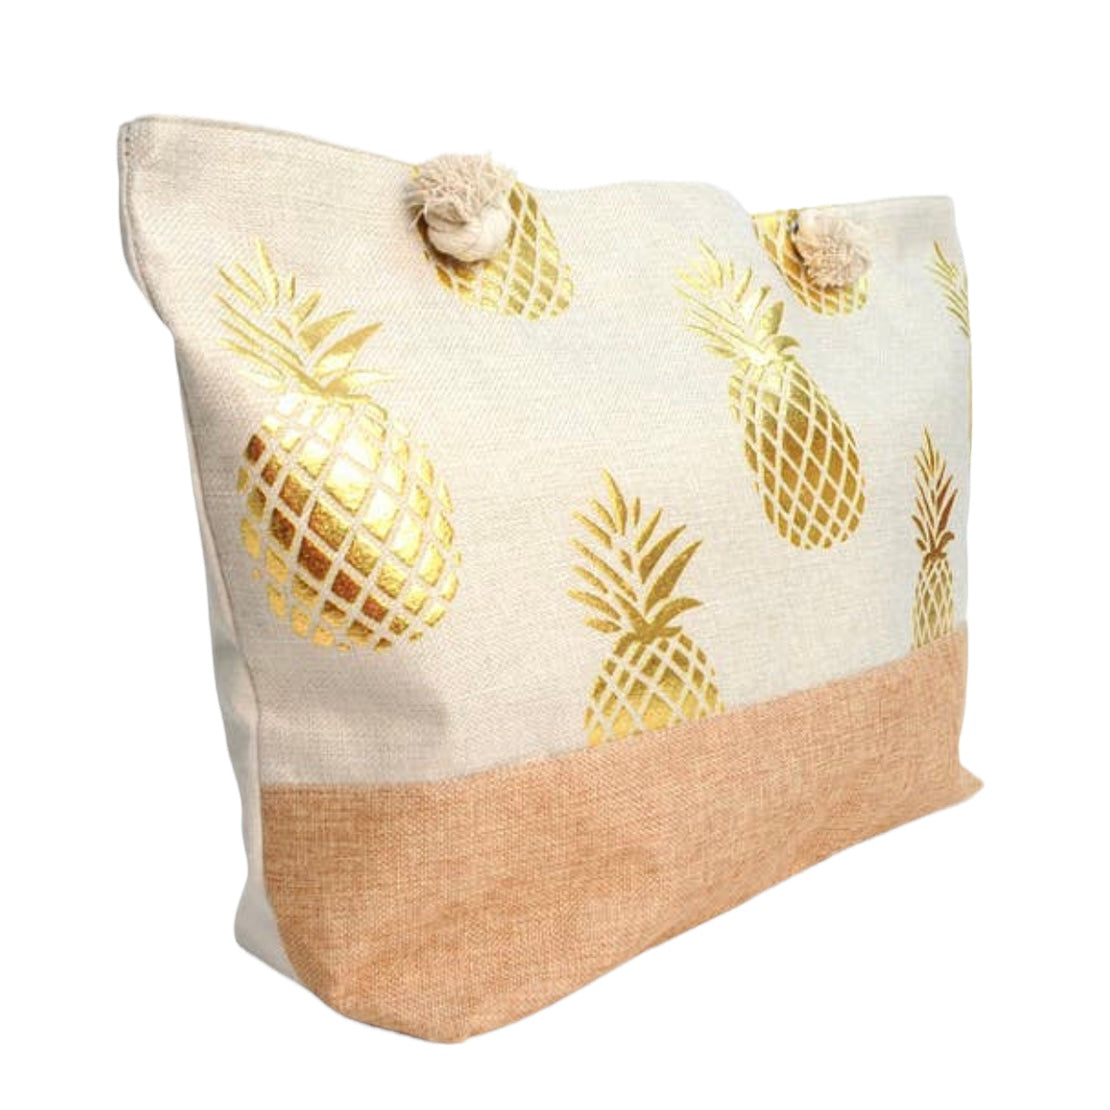 Gold Pineapples  Summer Beach Tote Bag